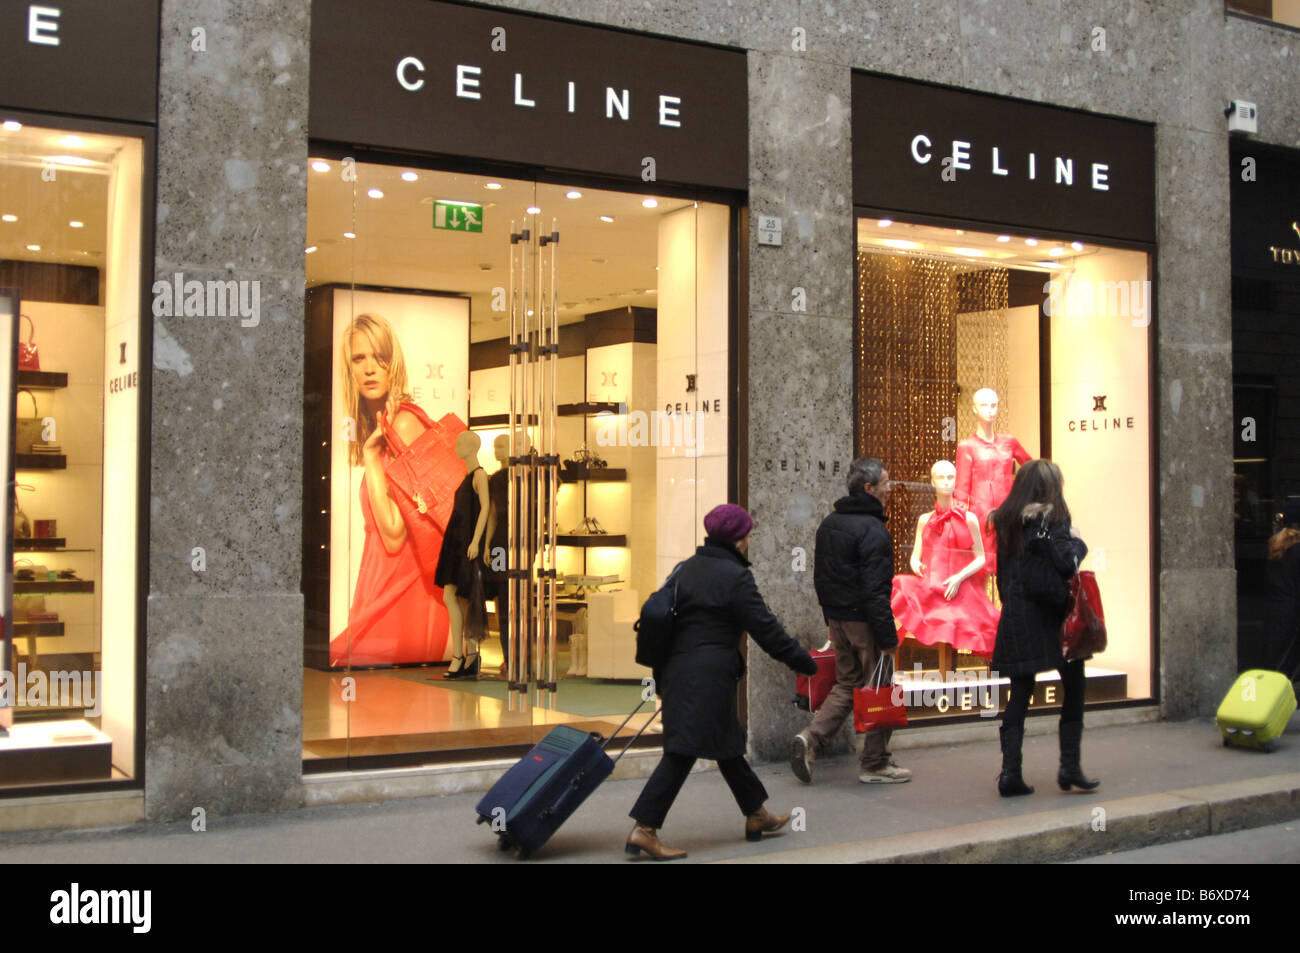 Frankfurt,Germany, 03/01/2020: Logo of Celine, Paris on a store in Frankfrt  am Main Stock Photo - Alamy